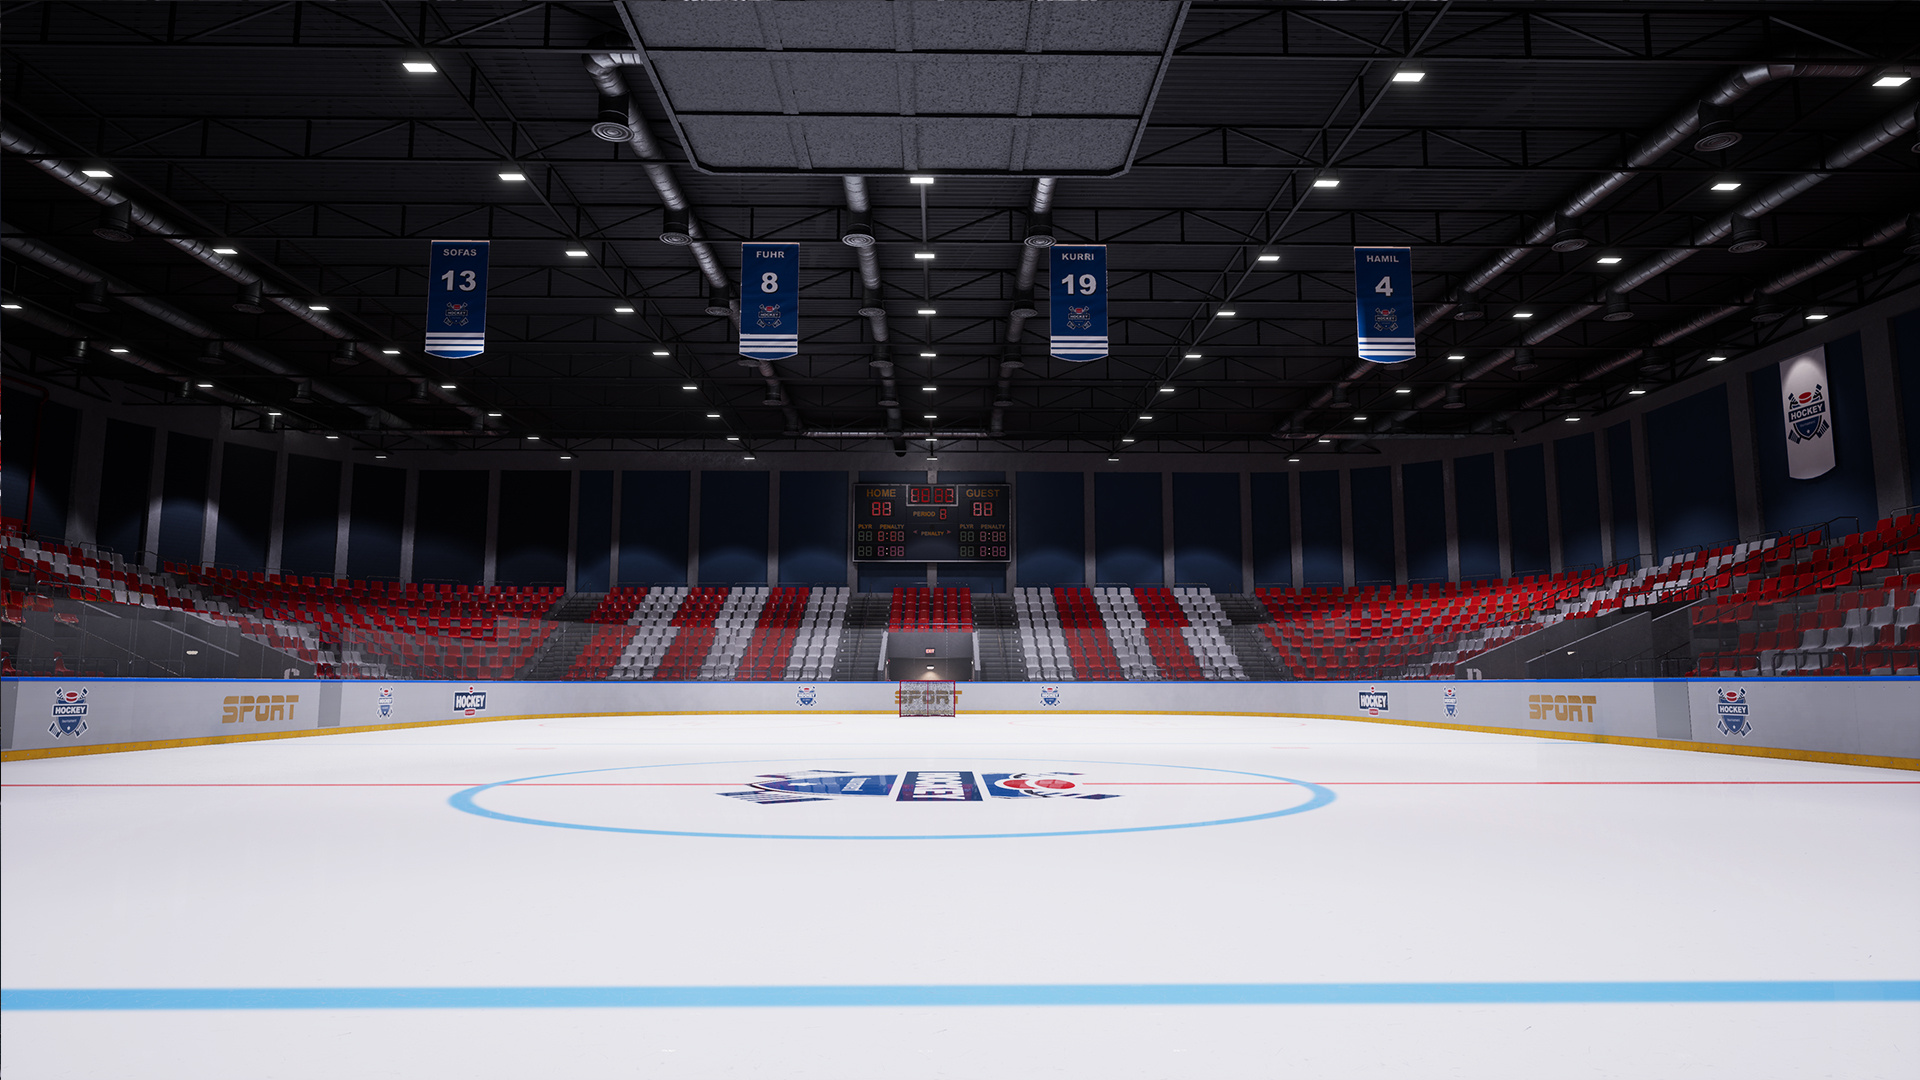 Hockey Rink, Arena design, Sports infrastructure, Impressive stadiums, 1920x1080 Full HD Desktop